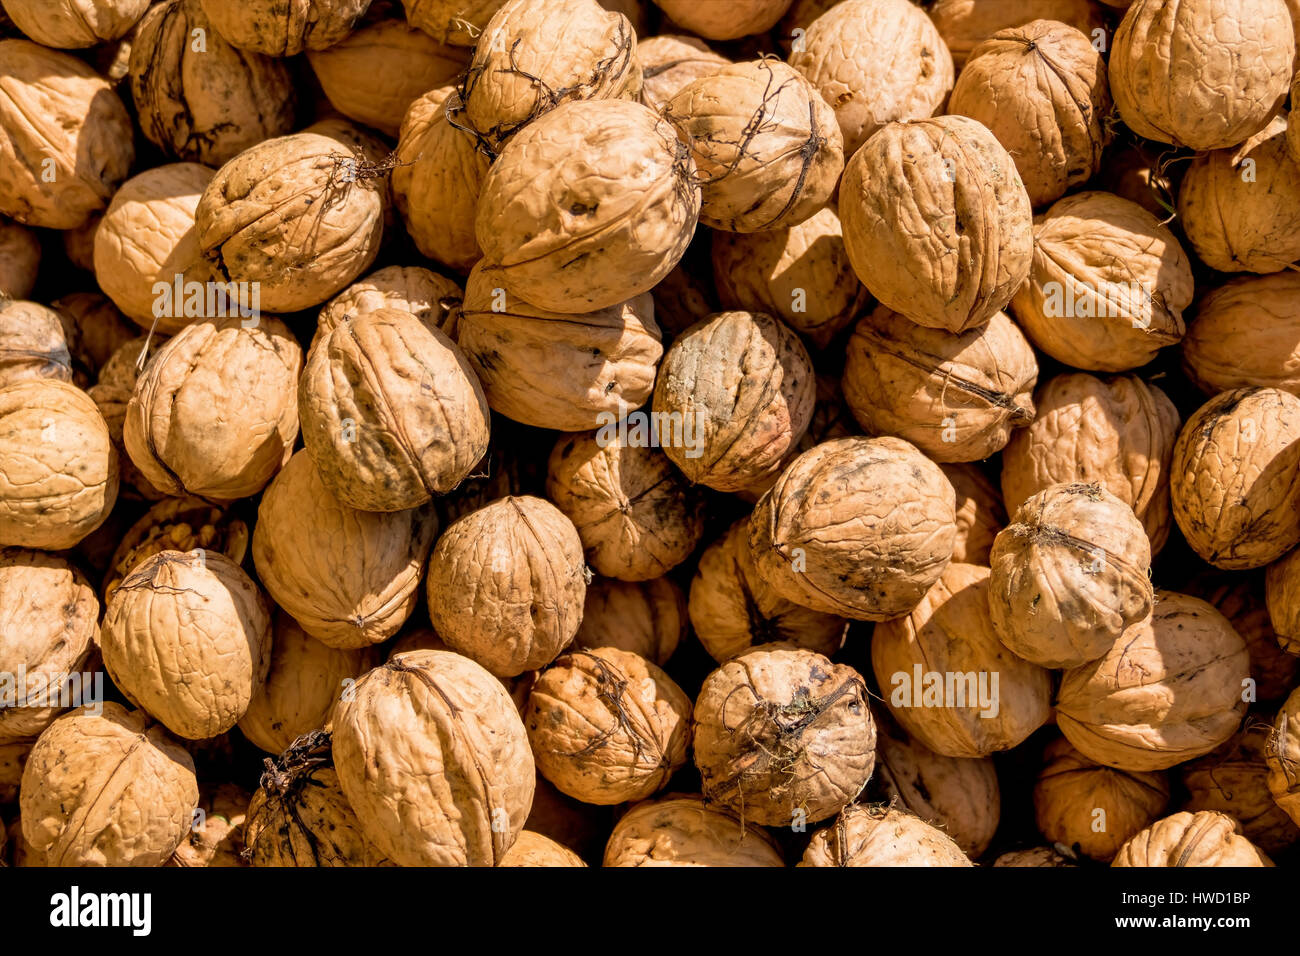 Many walnuts close-up, symbol for problems solve, fullness, hardness, Viele Walnüsse Nahaufnahme, Symbol für Probleme lösen, Fülle, Härte Stock Photo